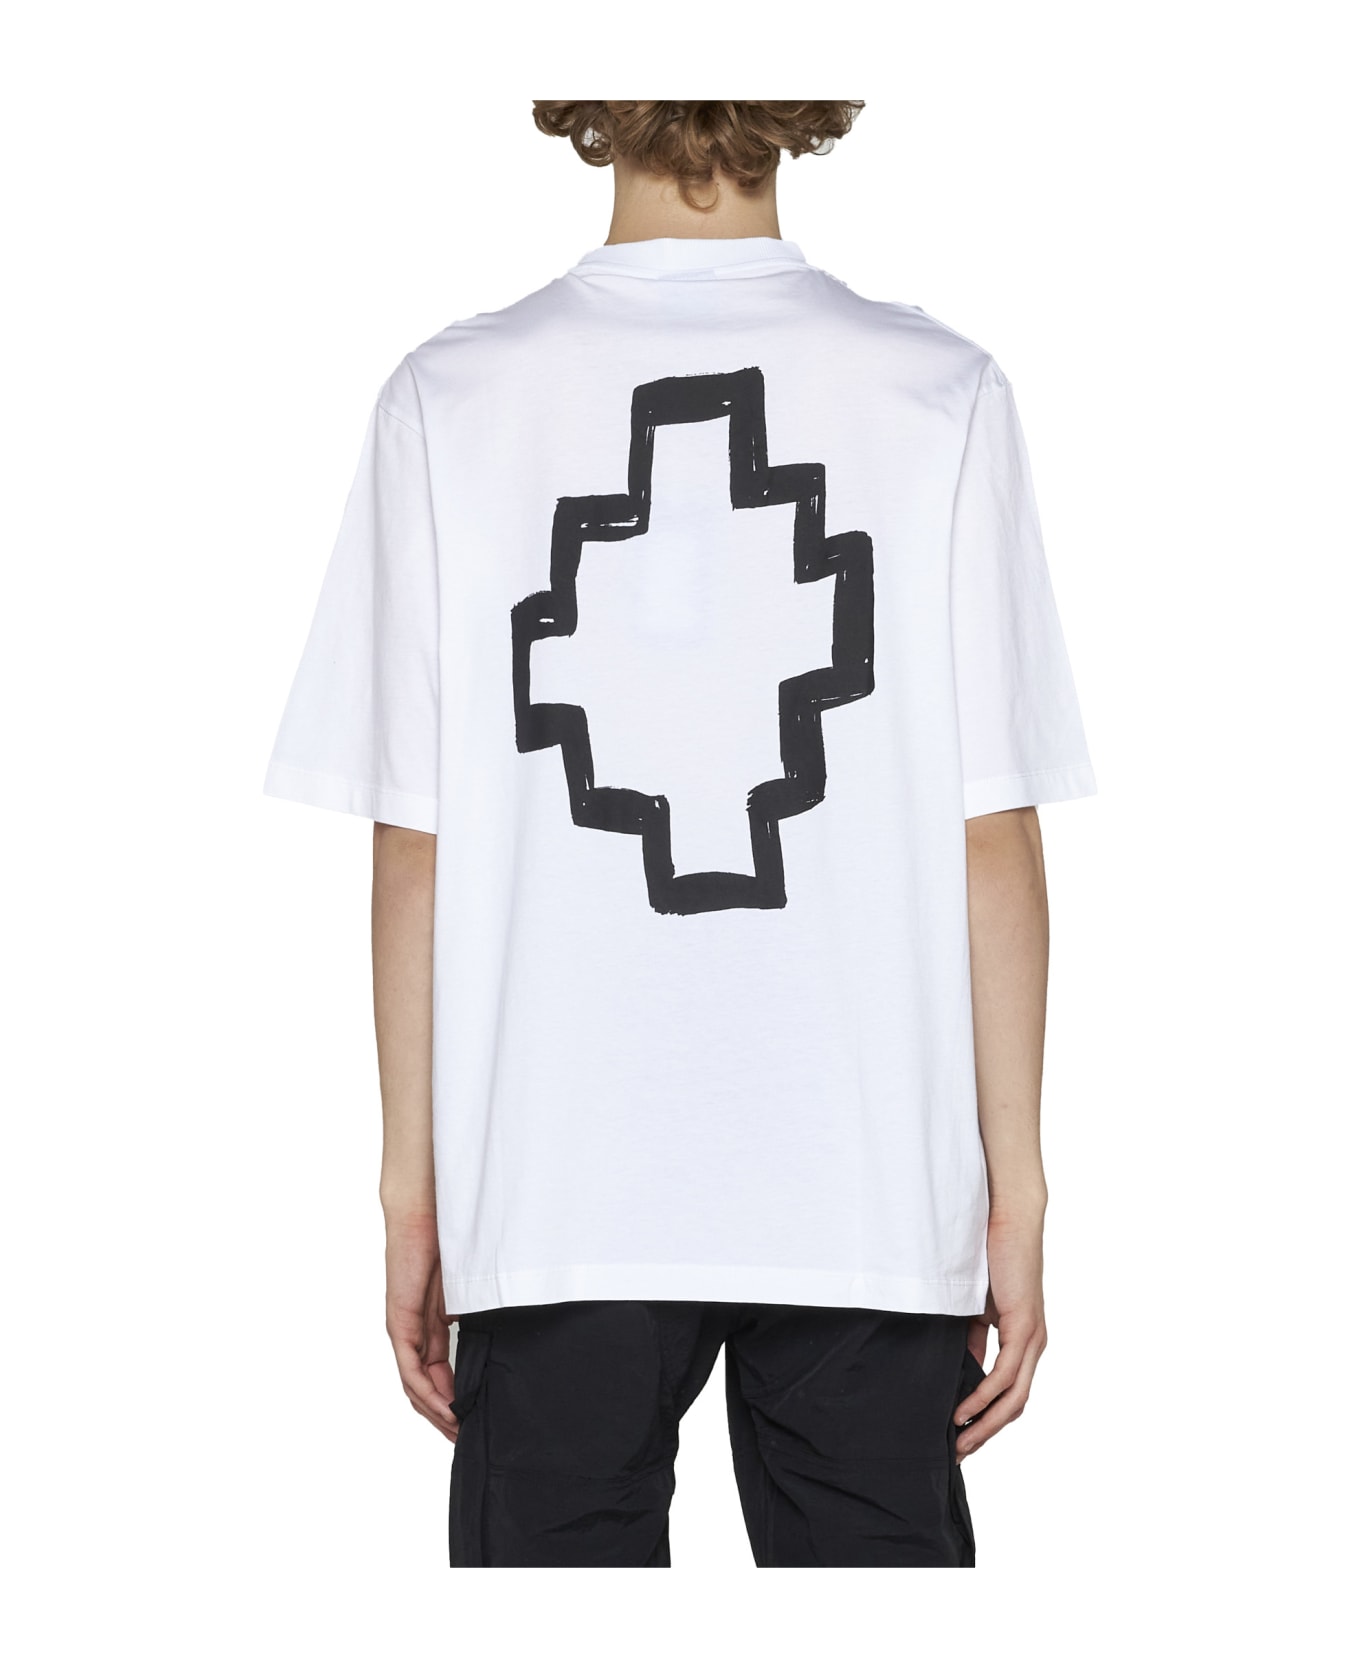 Marcelo Burlon White 'tempera Cross' T-shirt - White